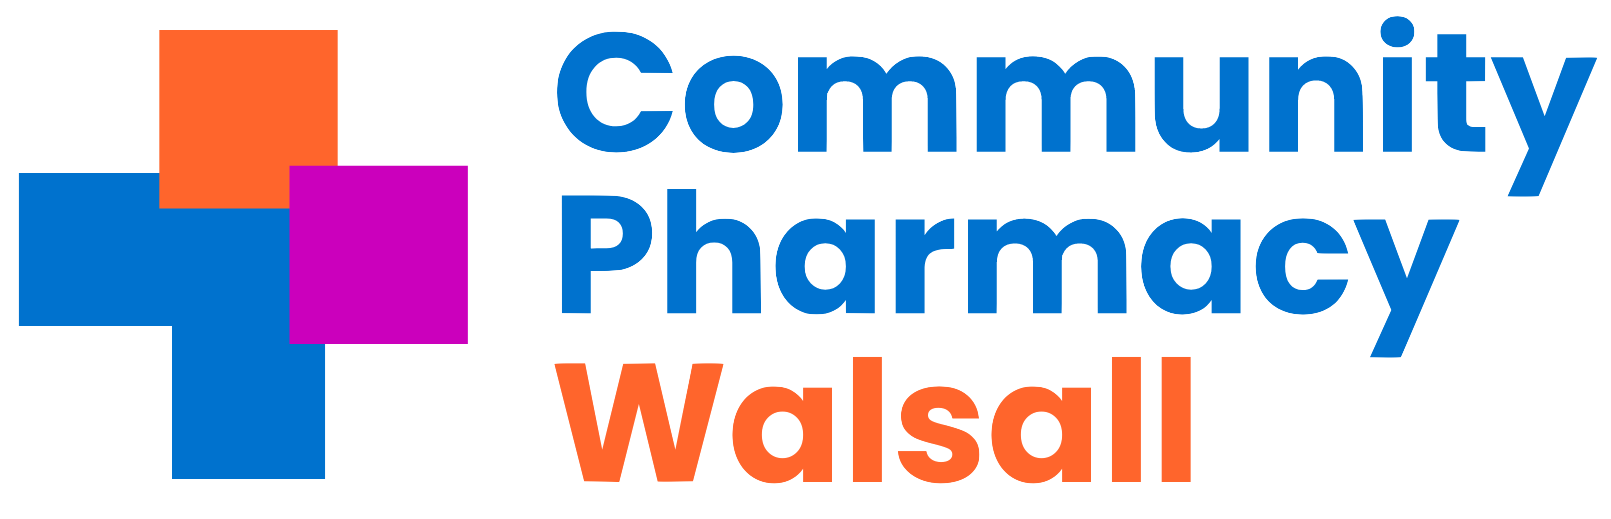 Community Pharmacy Walsall